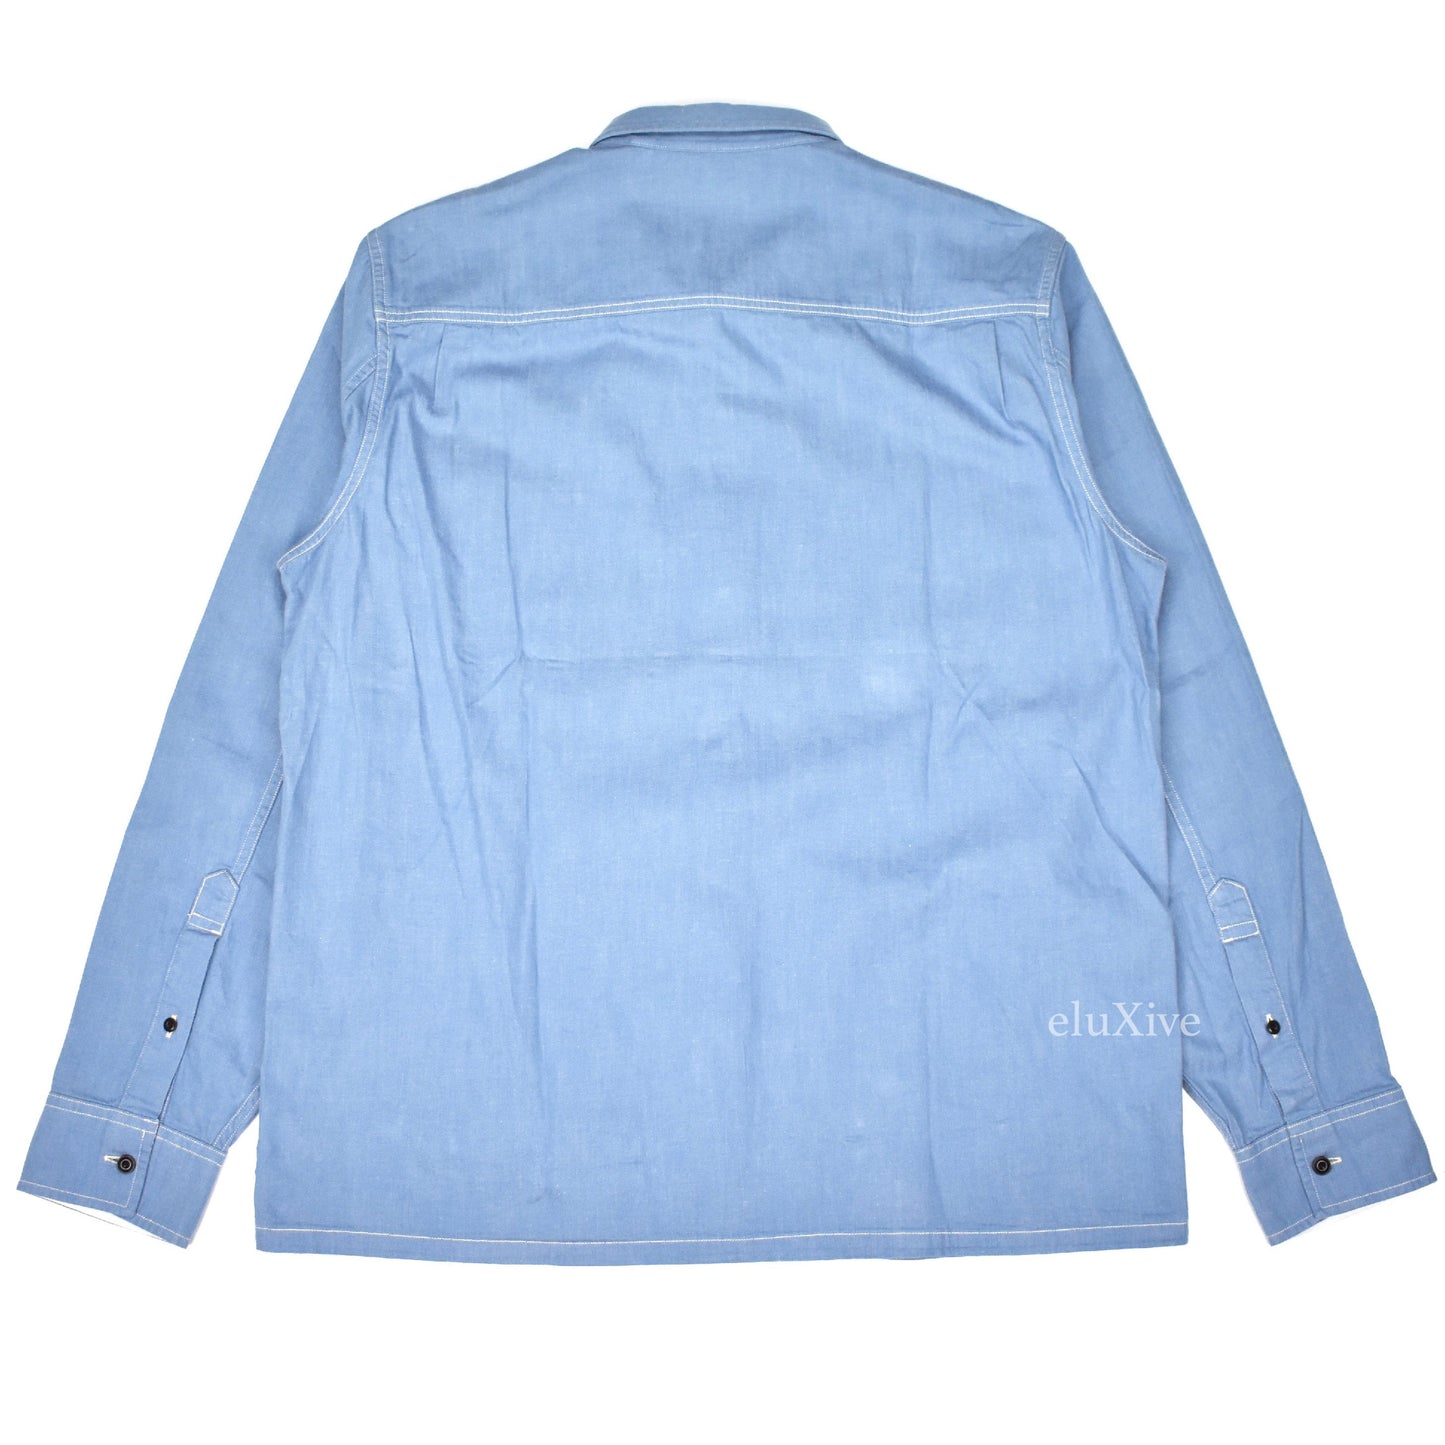 Burberry - Blue Chambray Work Shirt